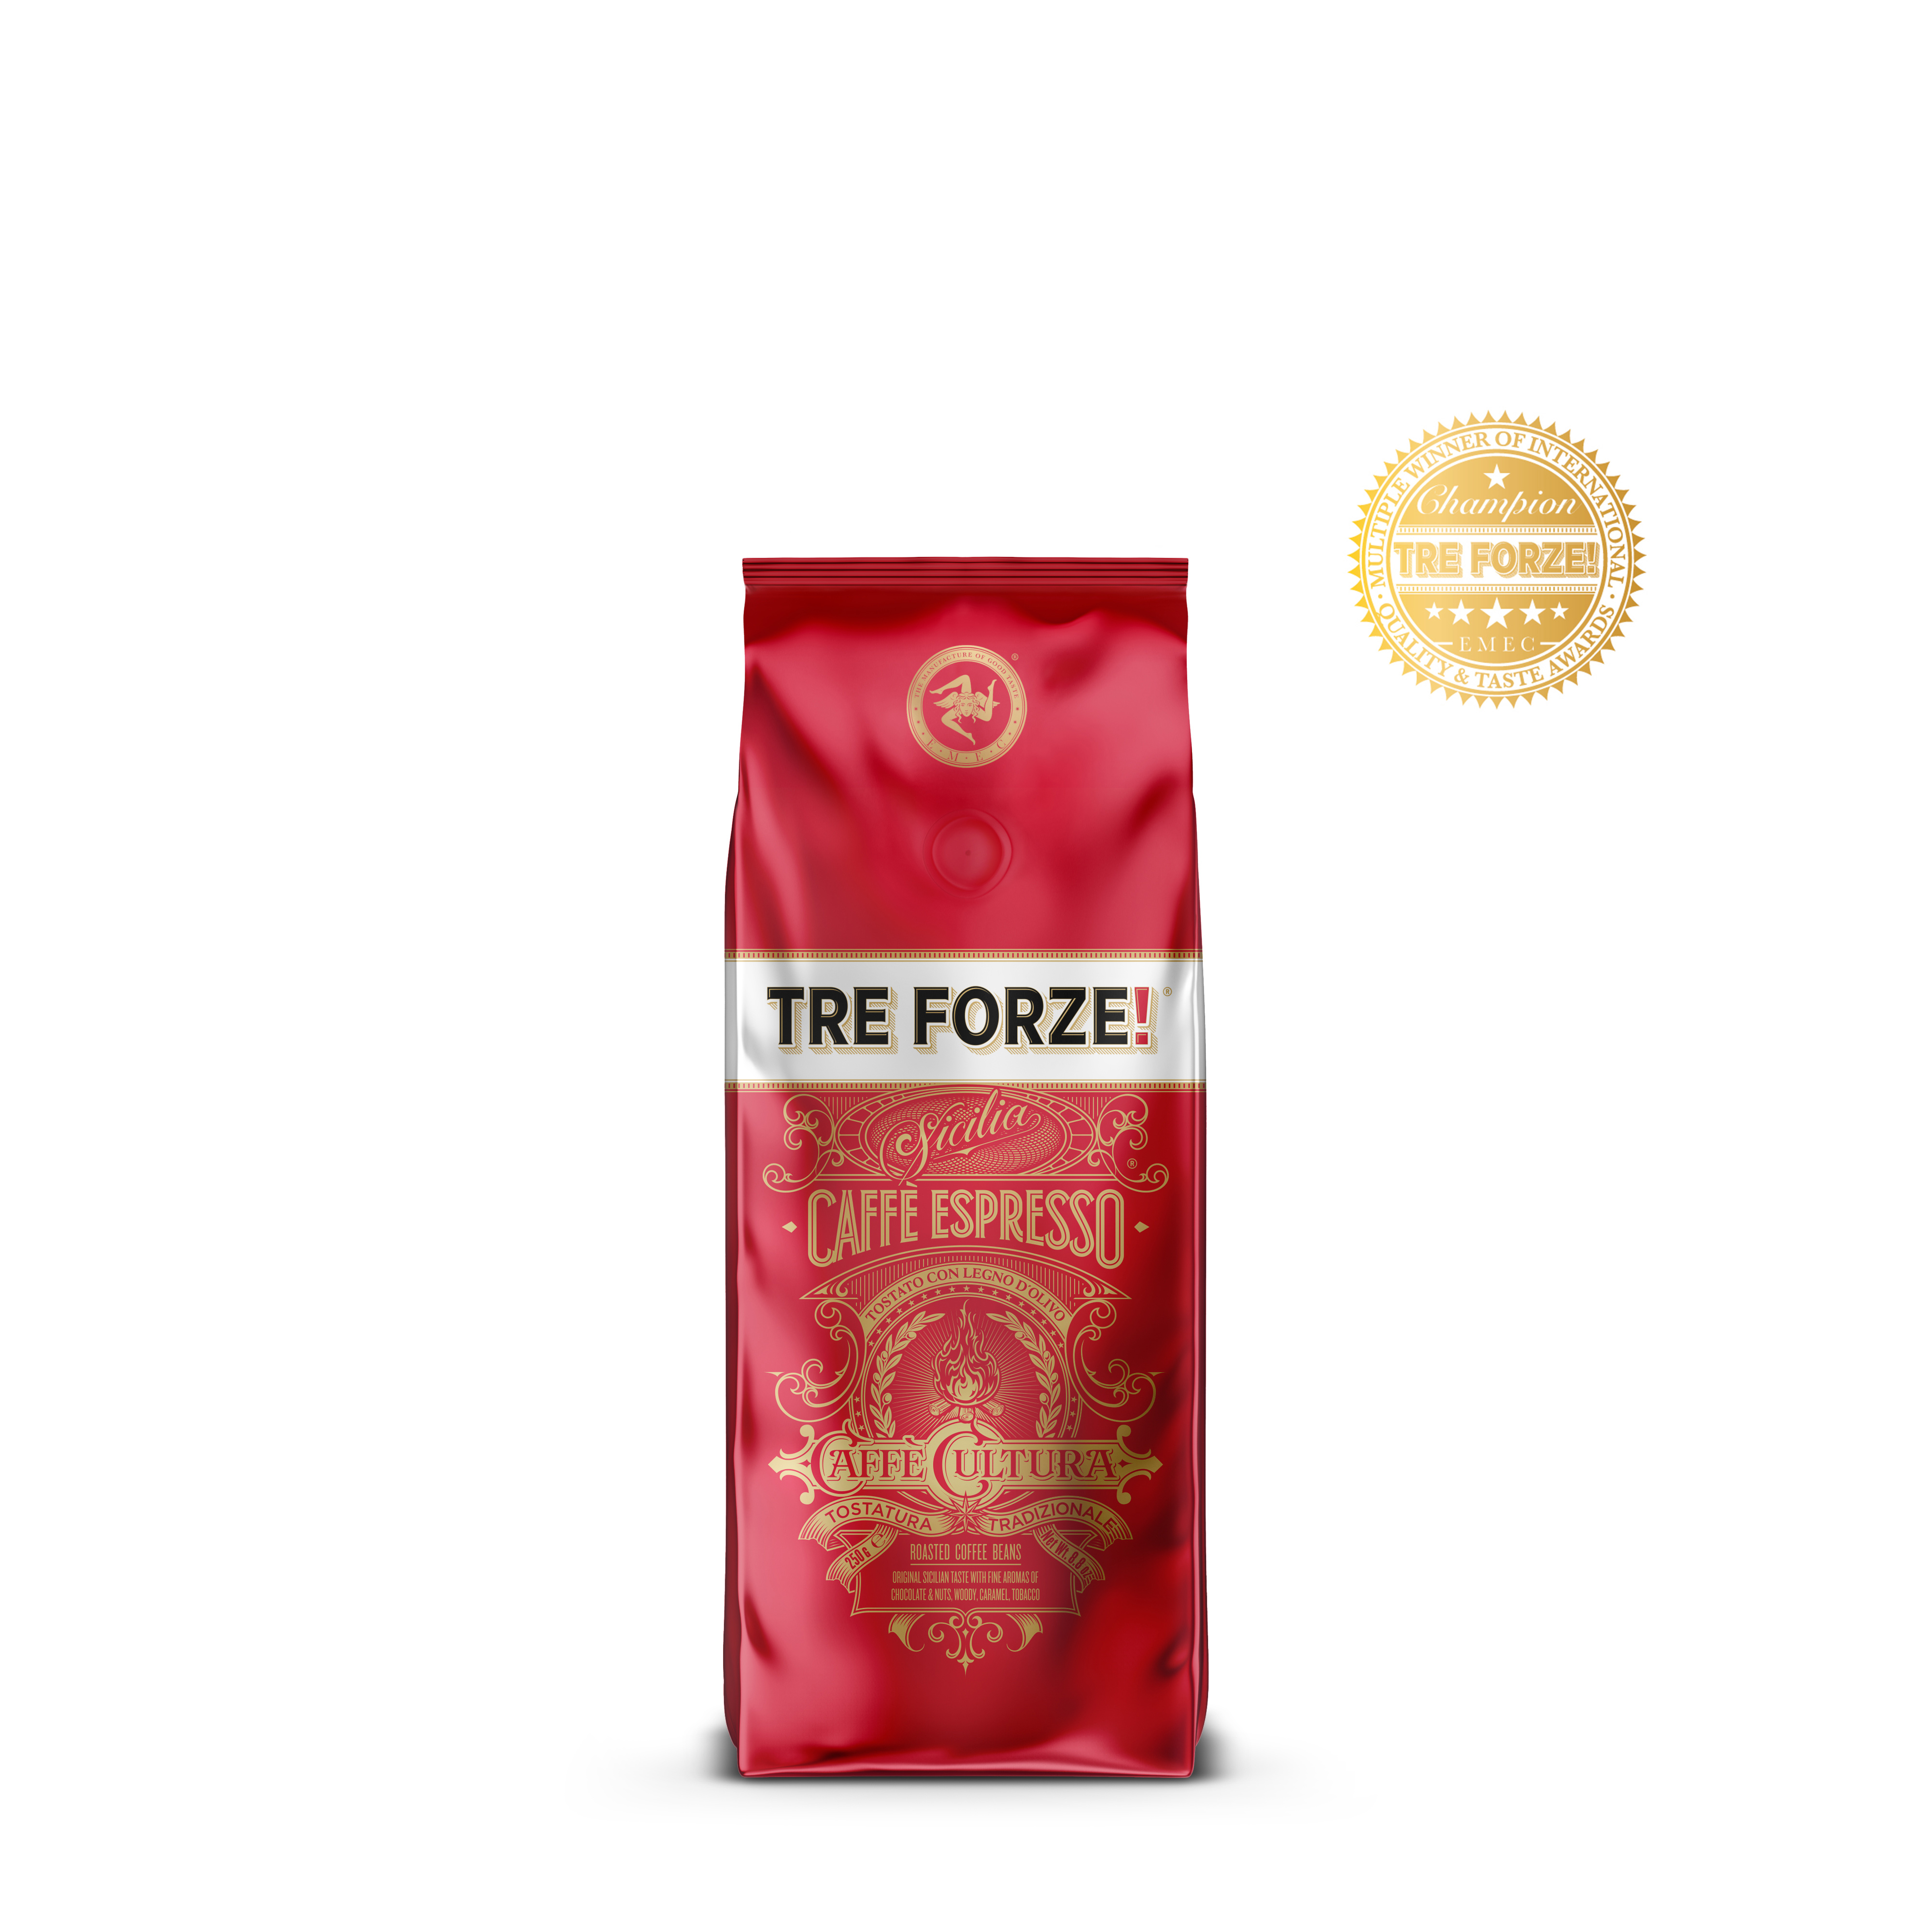 TRE FORZE! - Caffè Espresso - 250g Bohnen